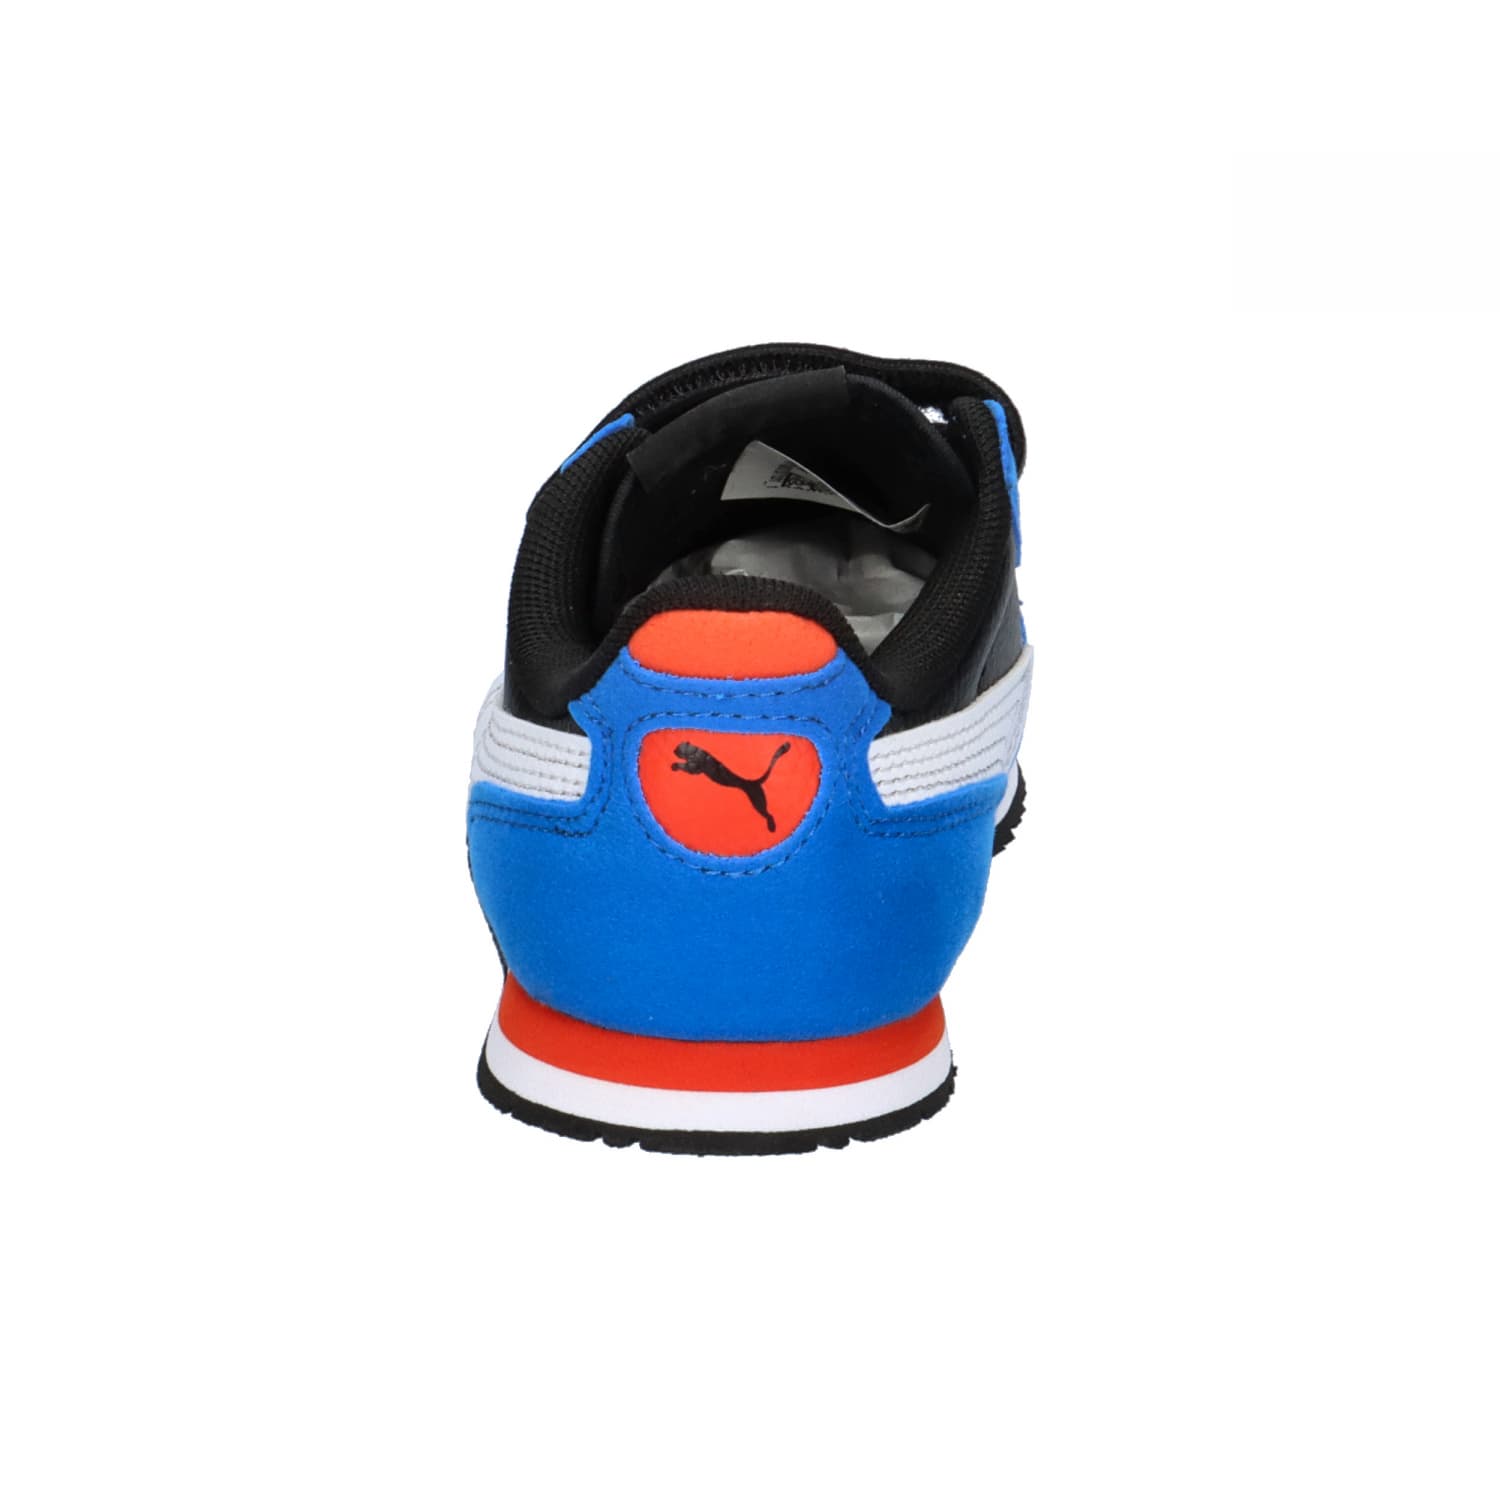 Puma Kinder Sneaker Cabana Racer SL 20 V PS 383730 | eBay